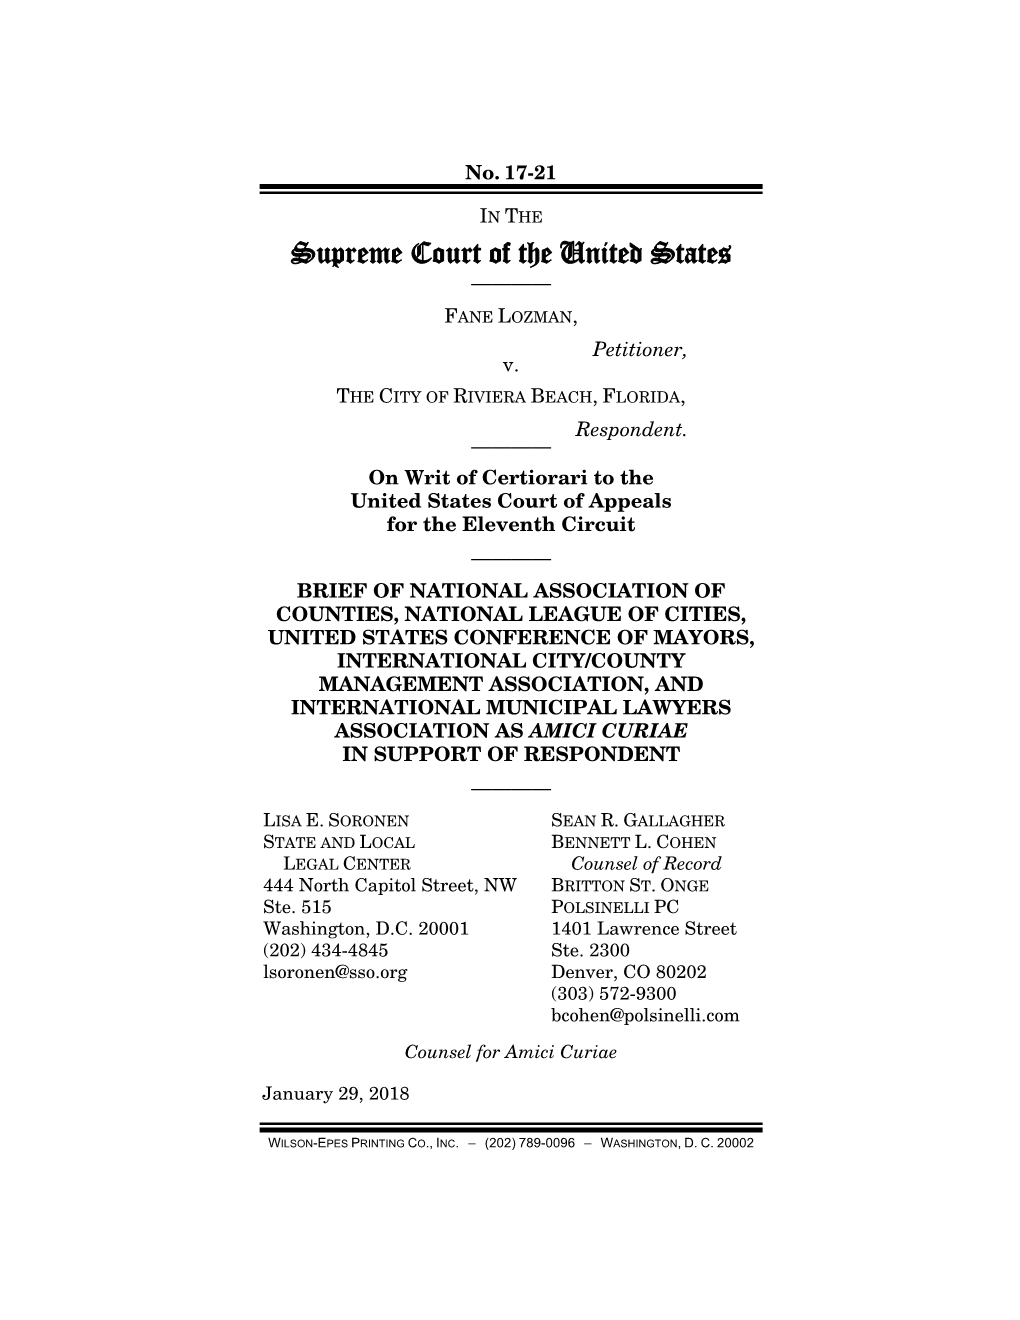 Supreme Court of the United States ———— FANE LOZMAN, Petitioner, V